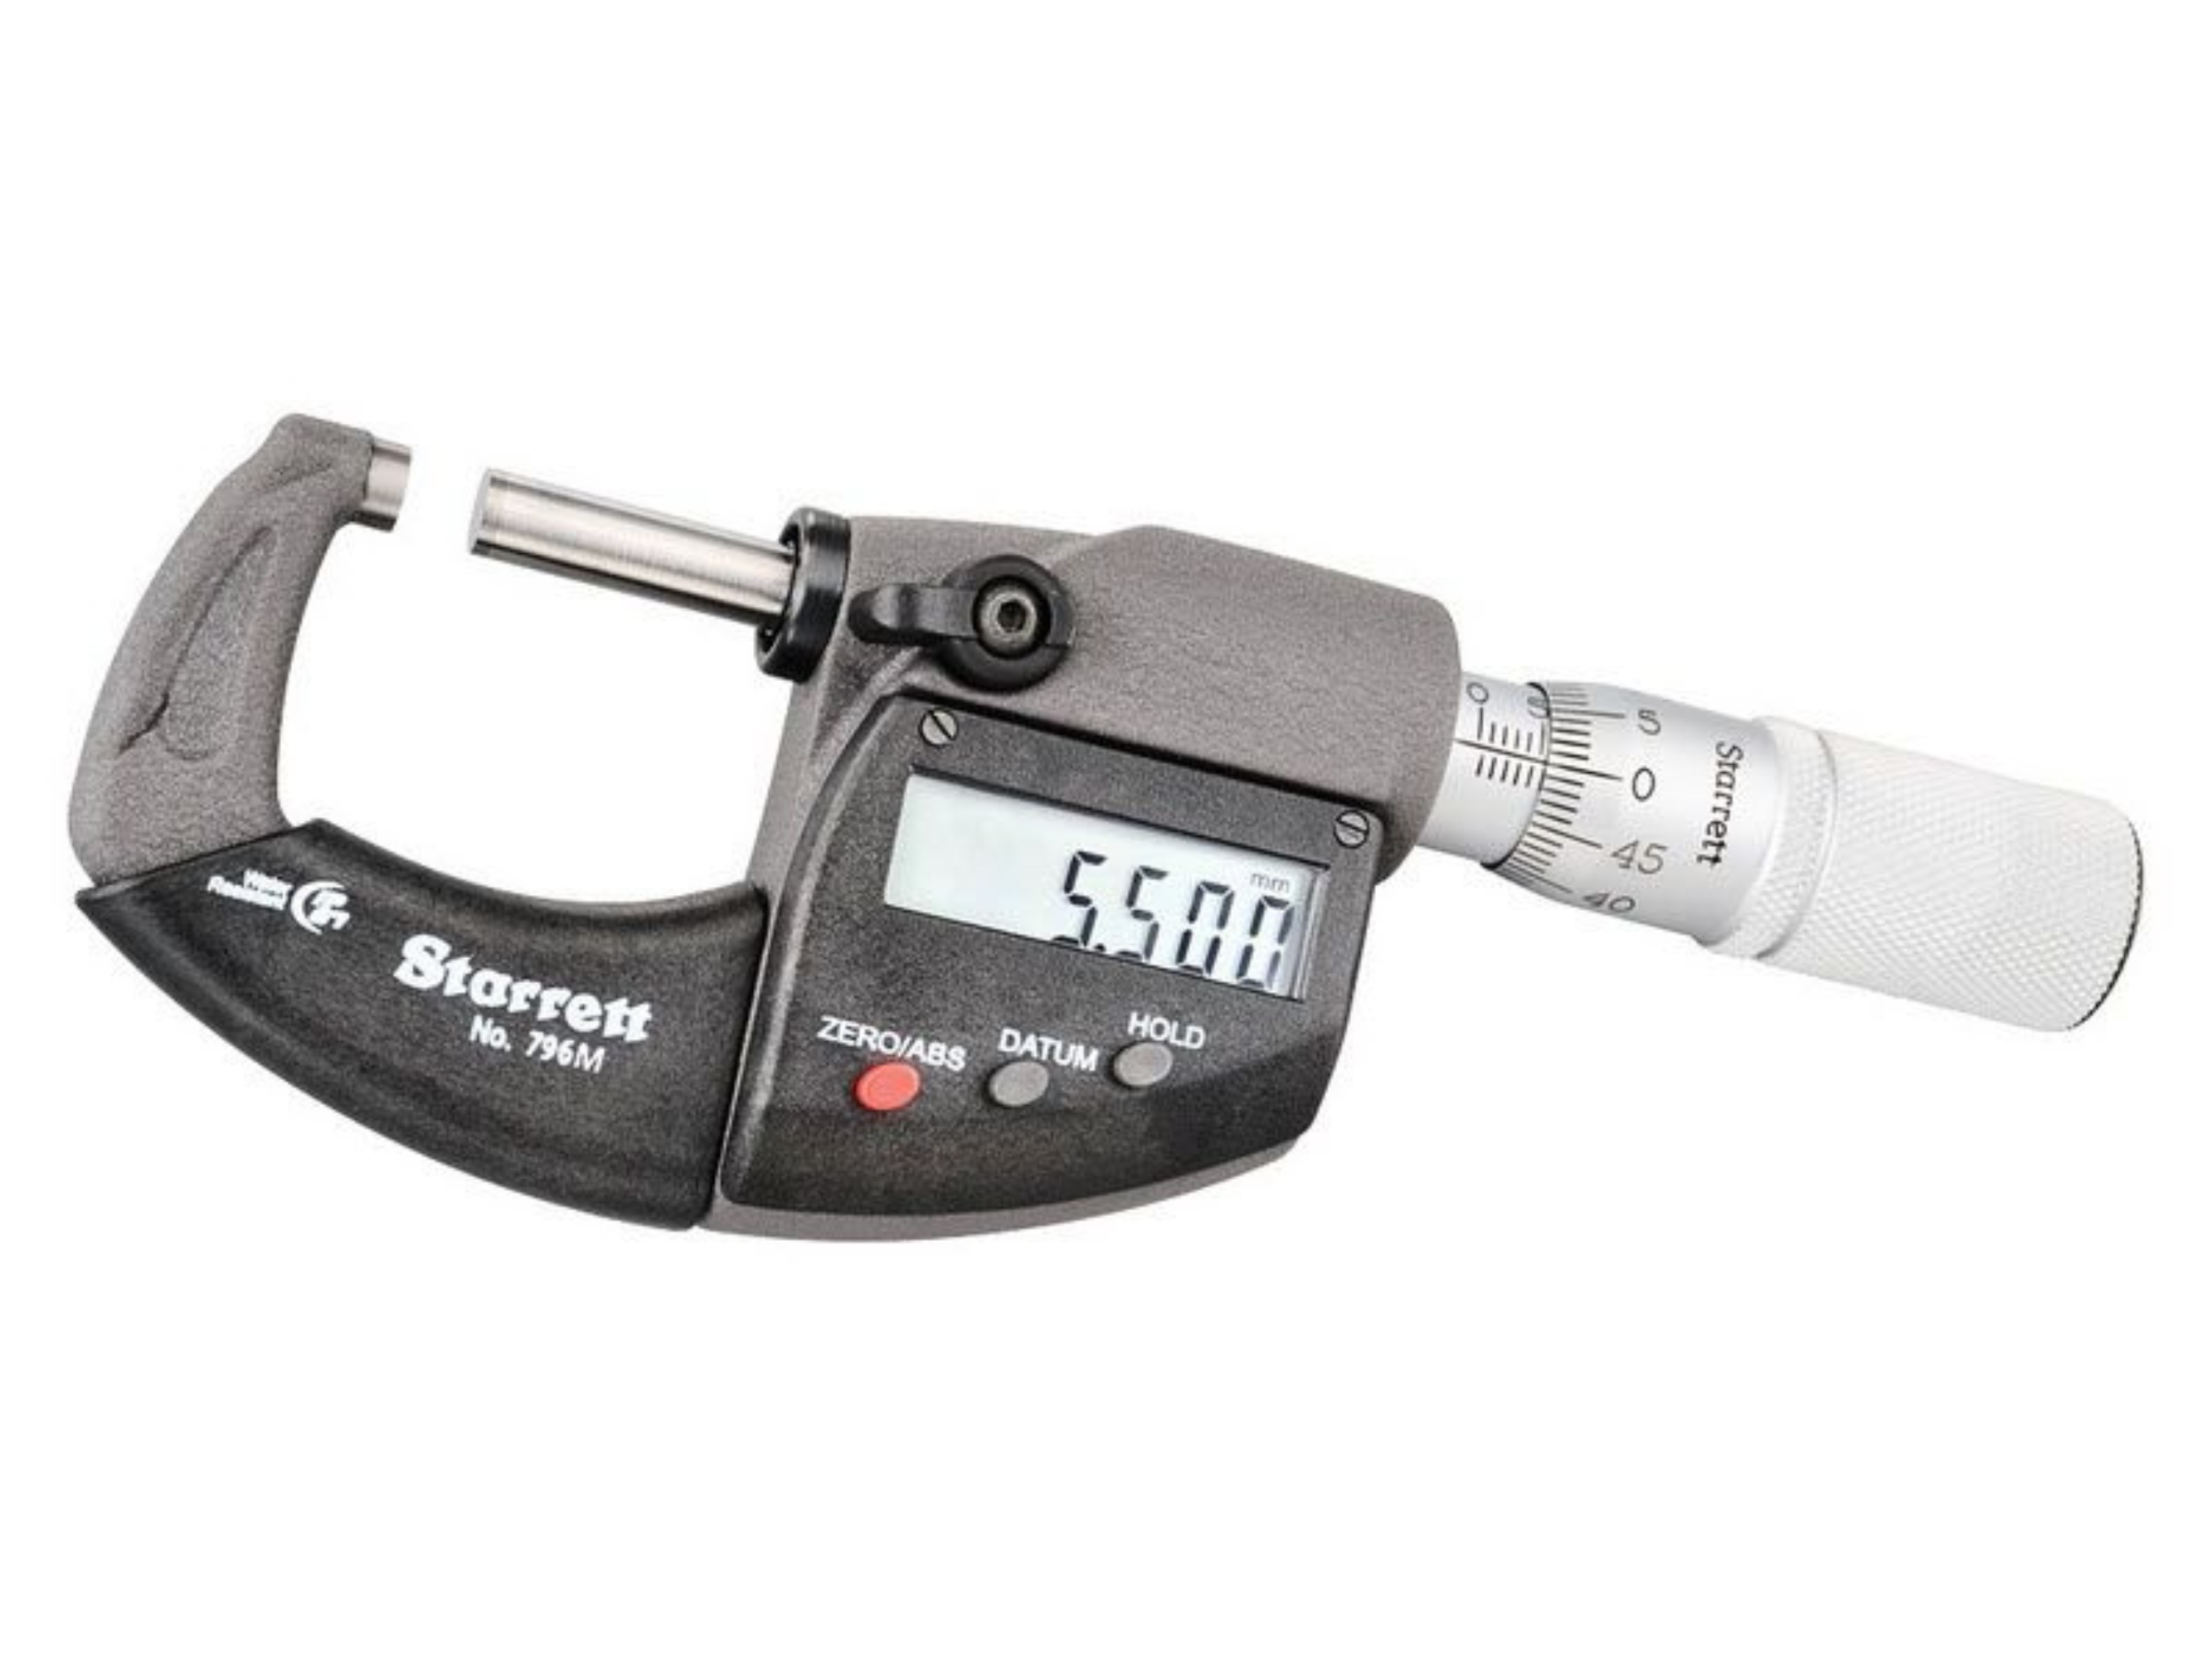 Warehouse Clearance Item: Digital Micrometer 75-100mm (3-4") IP67